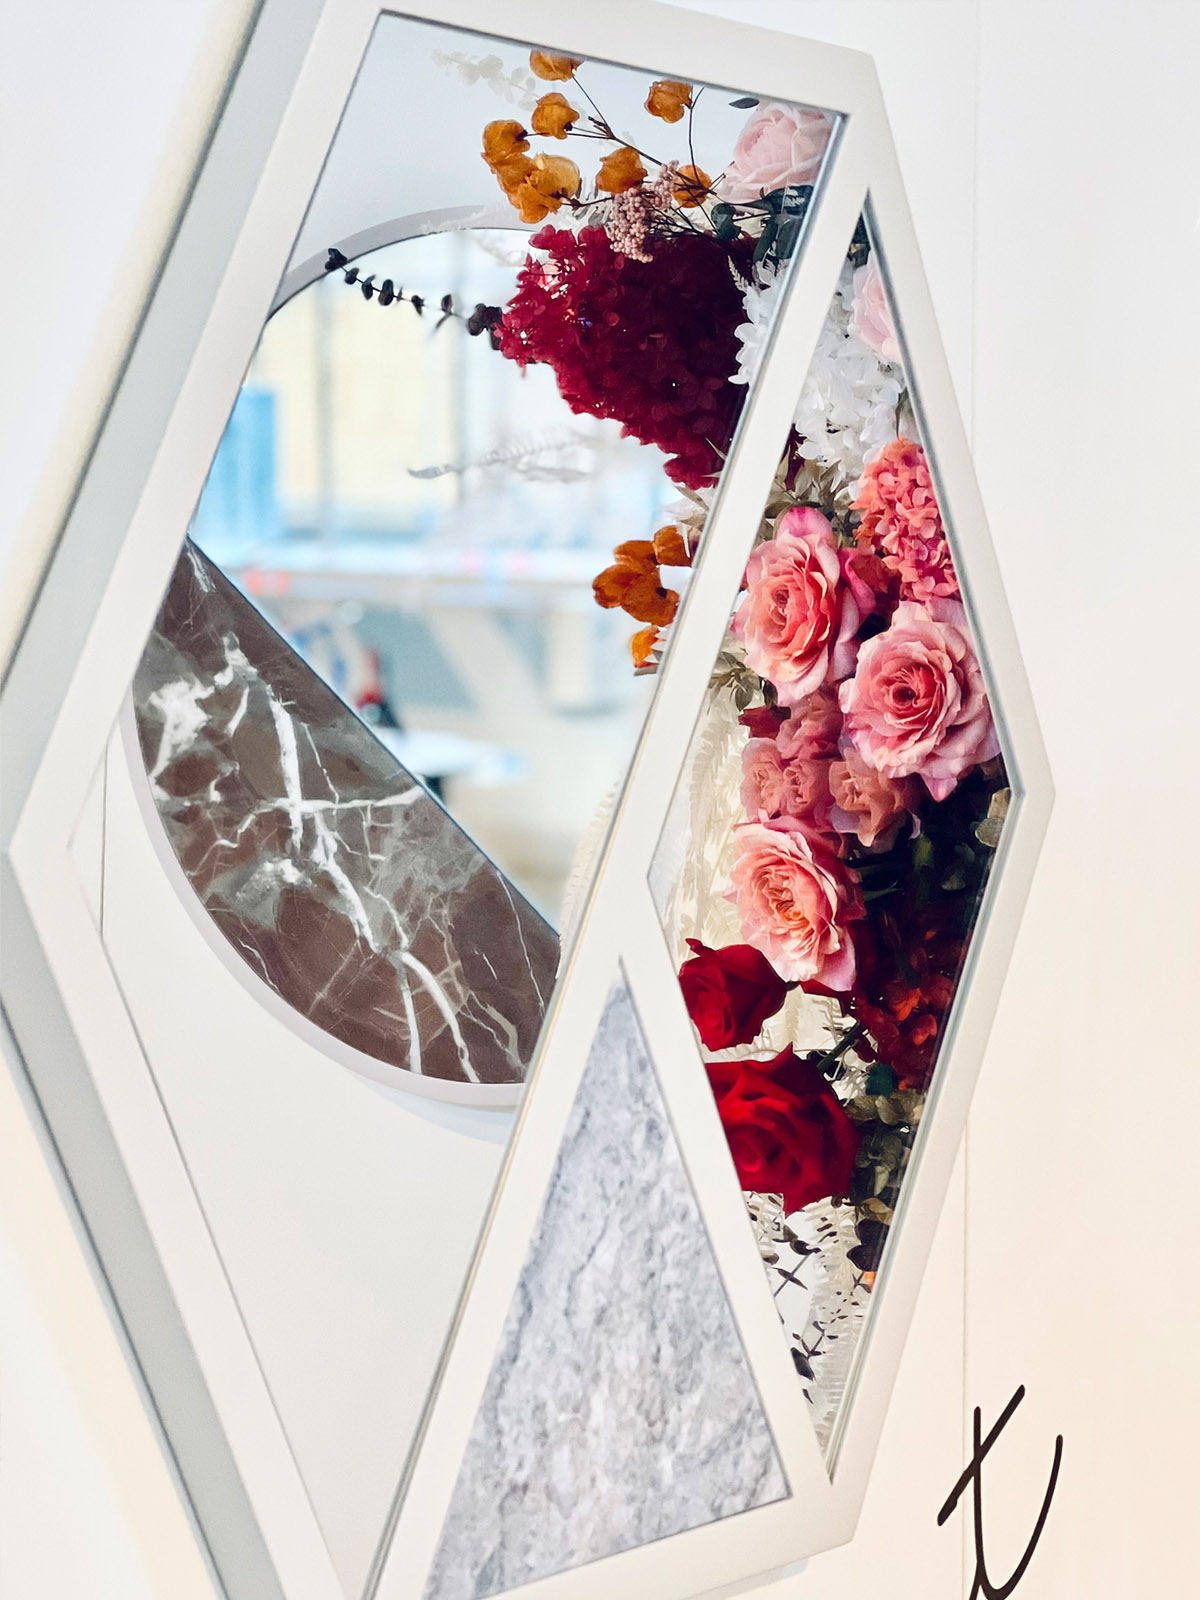 Dutch Design Week Secret Garden flower mirror on Thursd